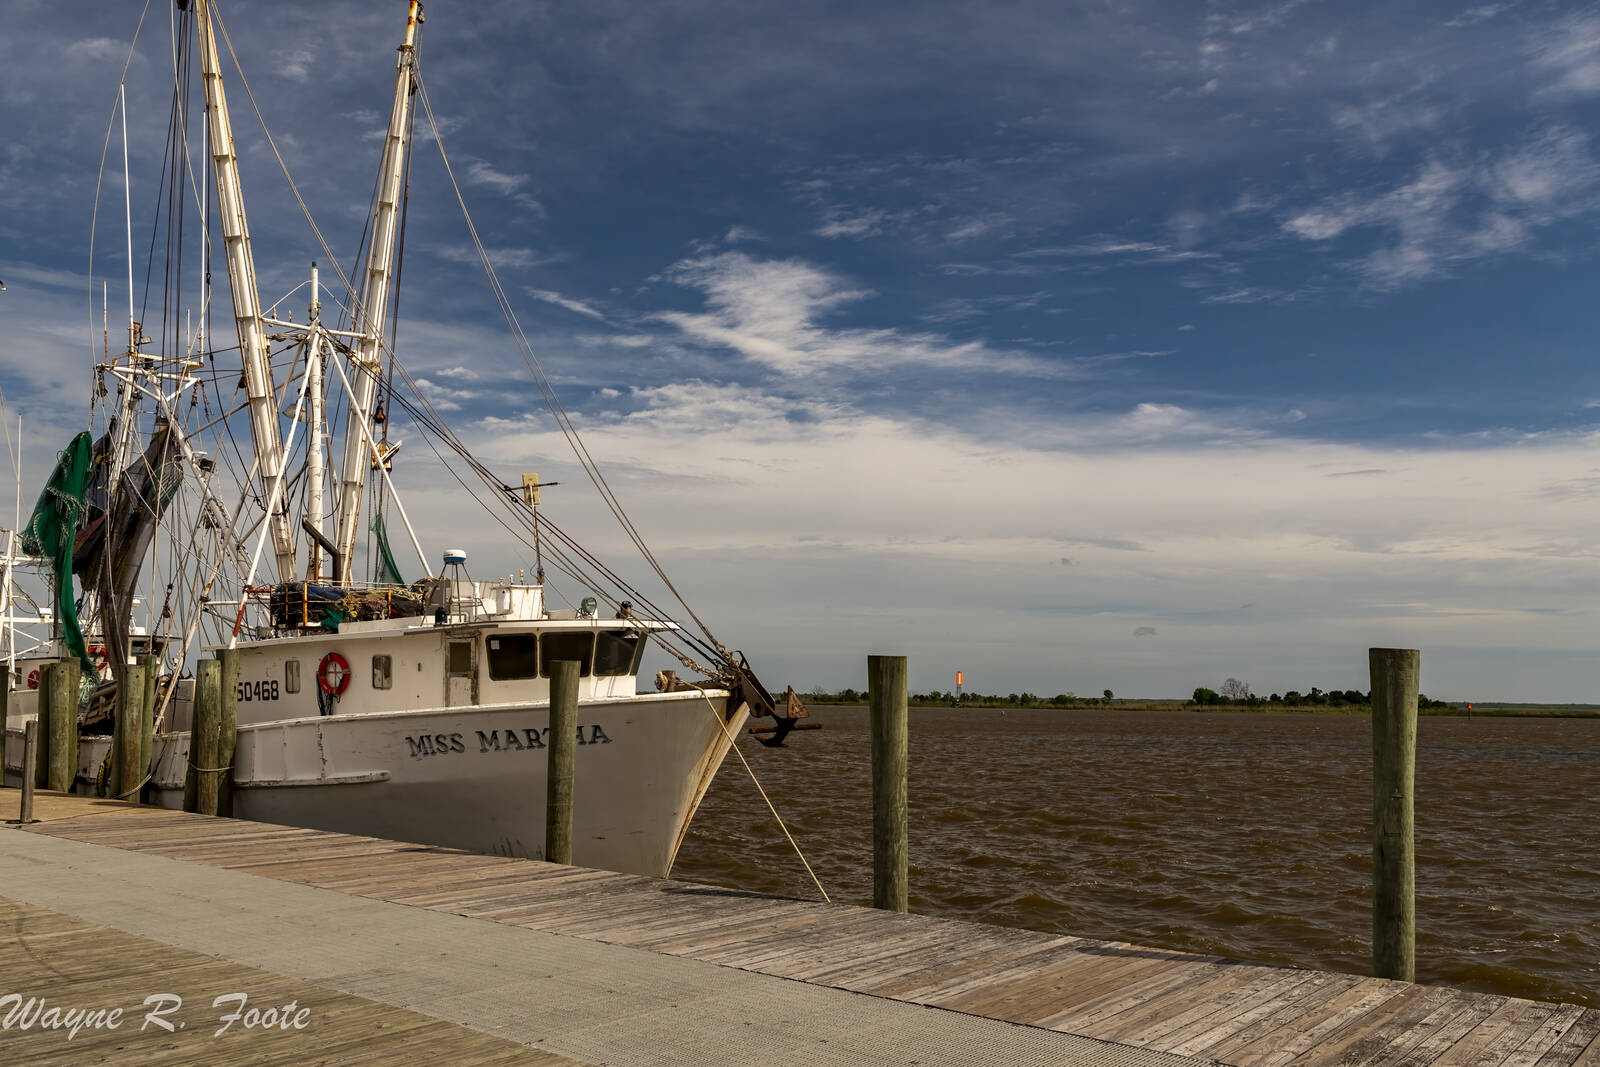 Image of Apalachicola City Dock by Wayne Foote